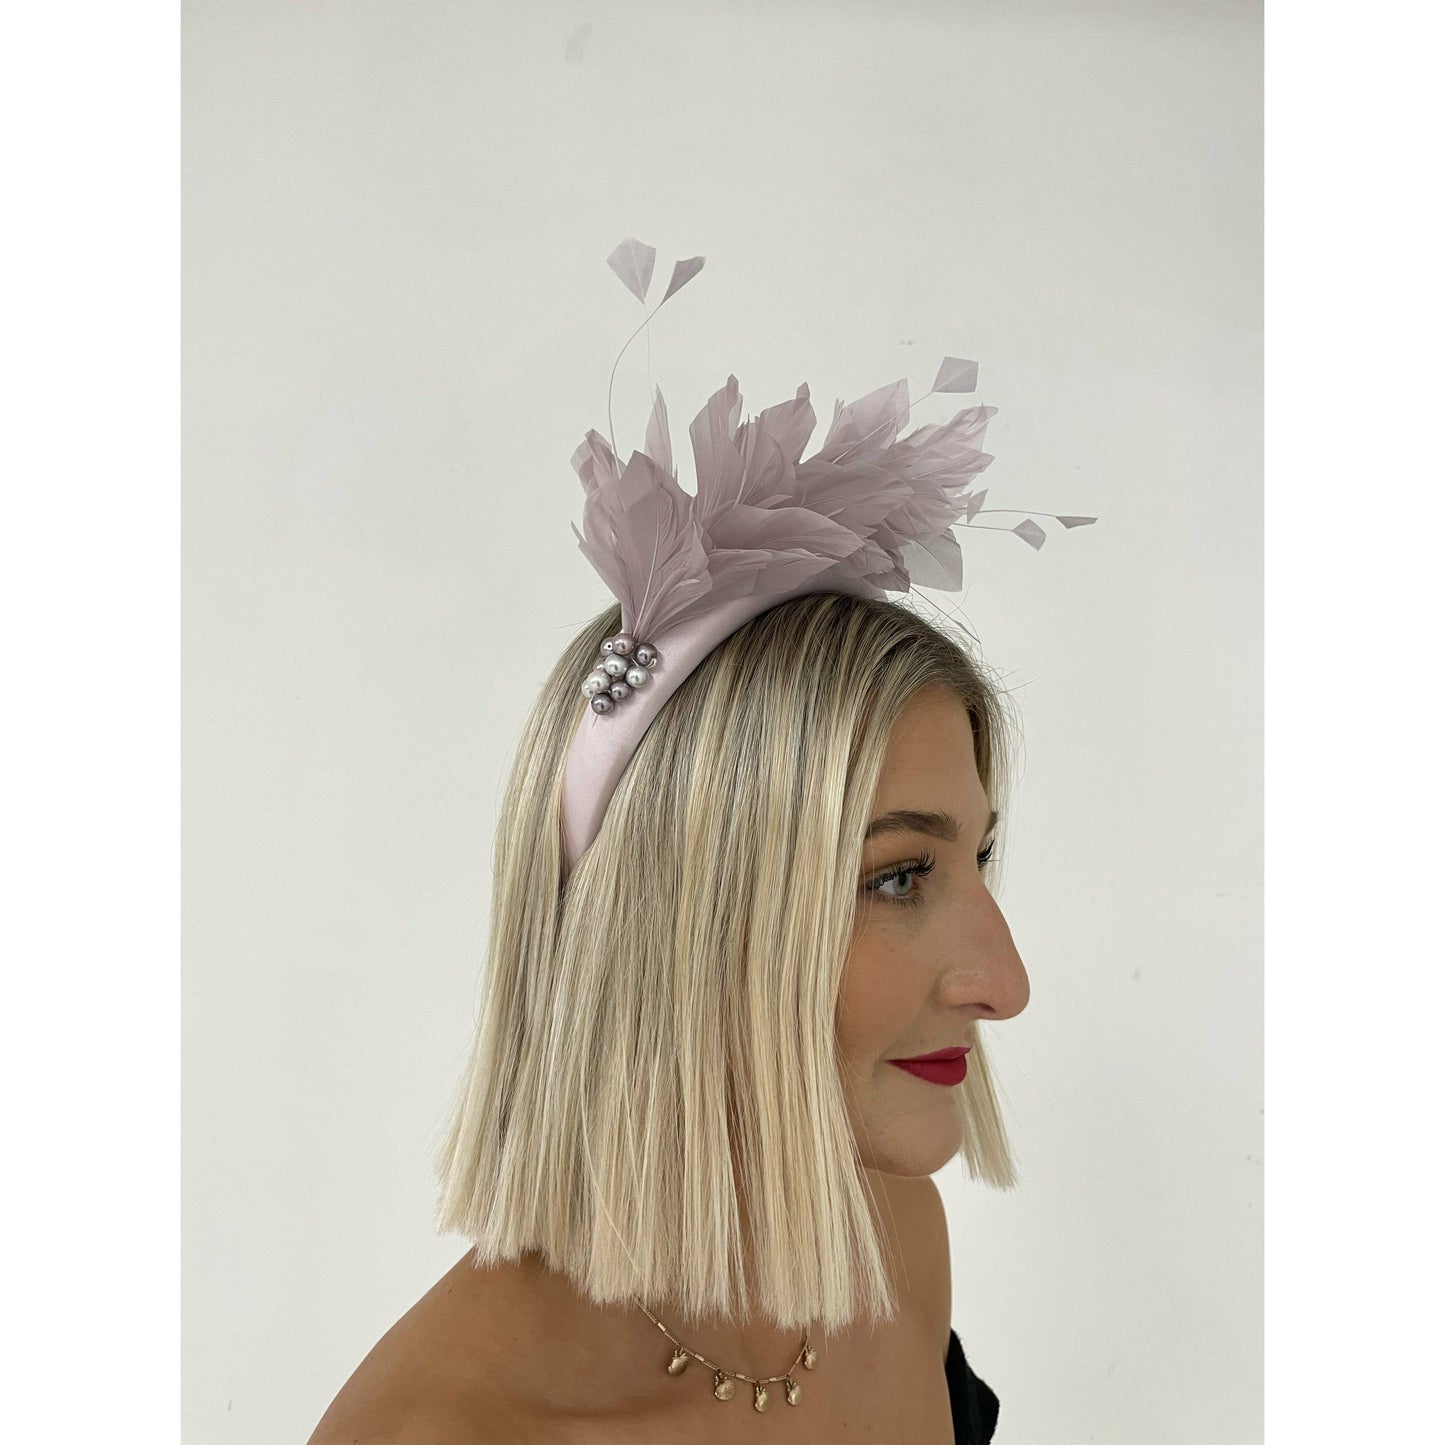 Small Windermere headband ‘Heather’